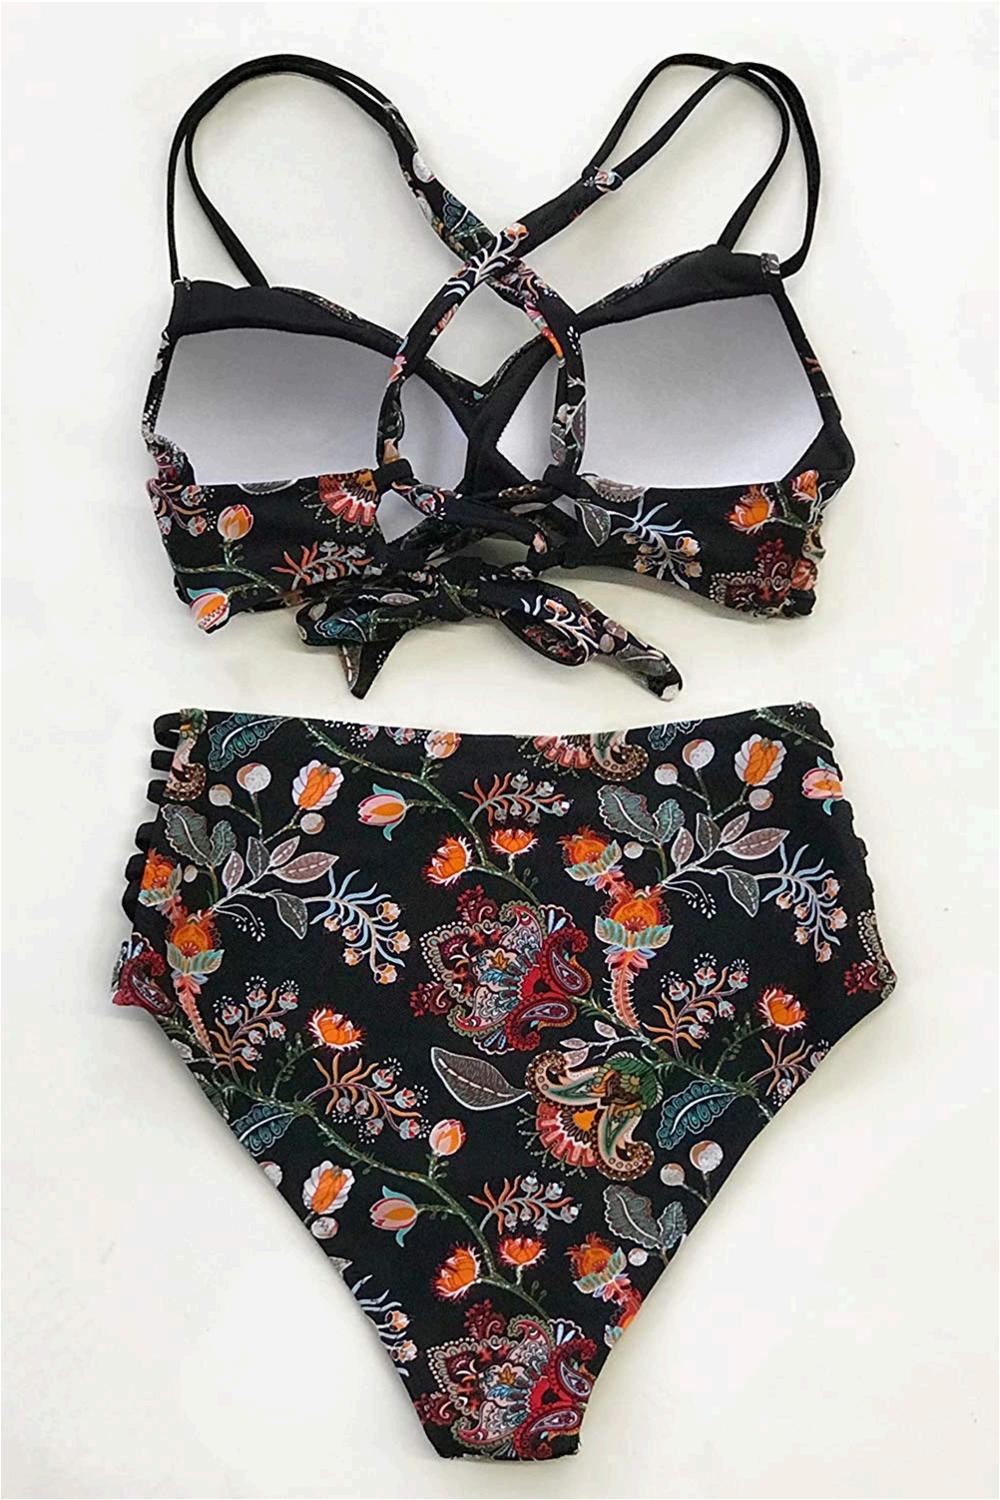 CUPSHE Women's Swimsuits Flower Dance High-Waisted Lace Bikinis, Black ...